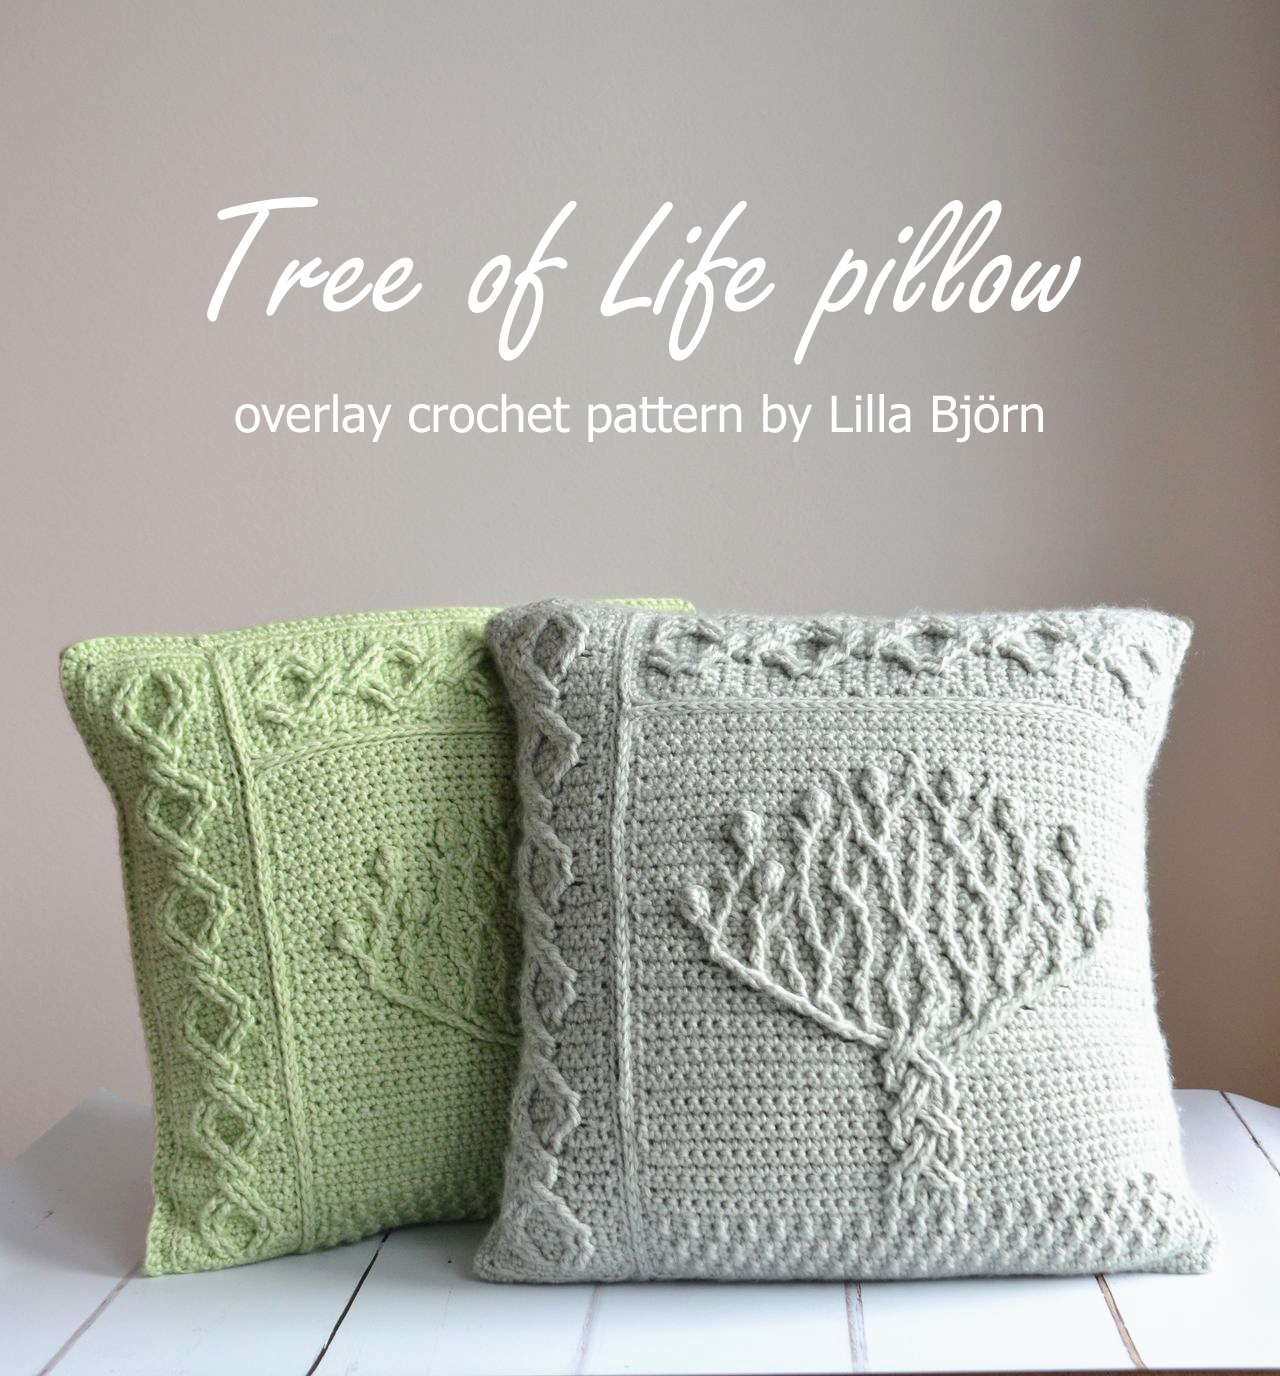 Tree of Life pillow – new overlay crochet pattern